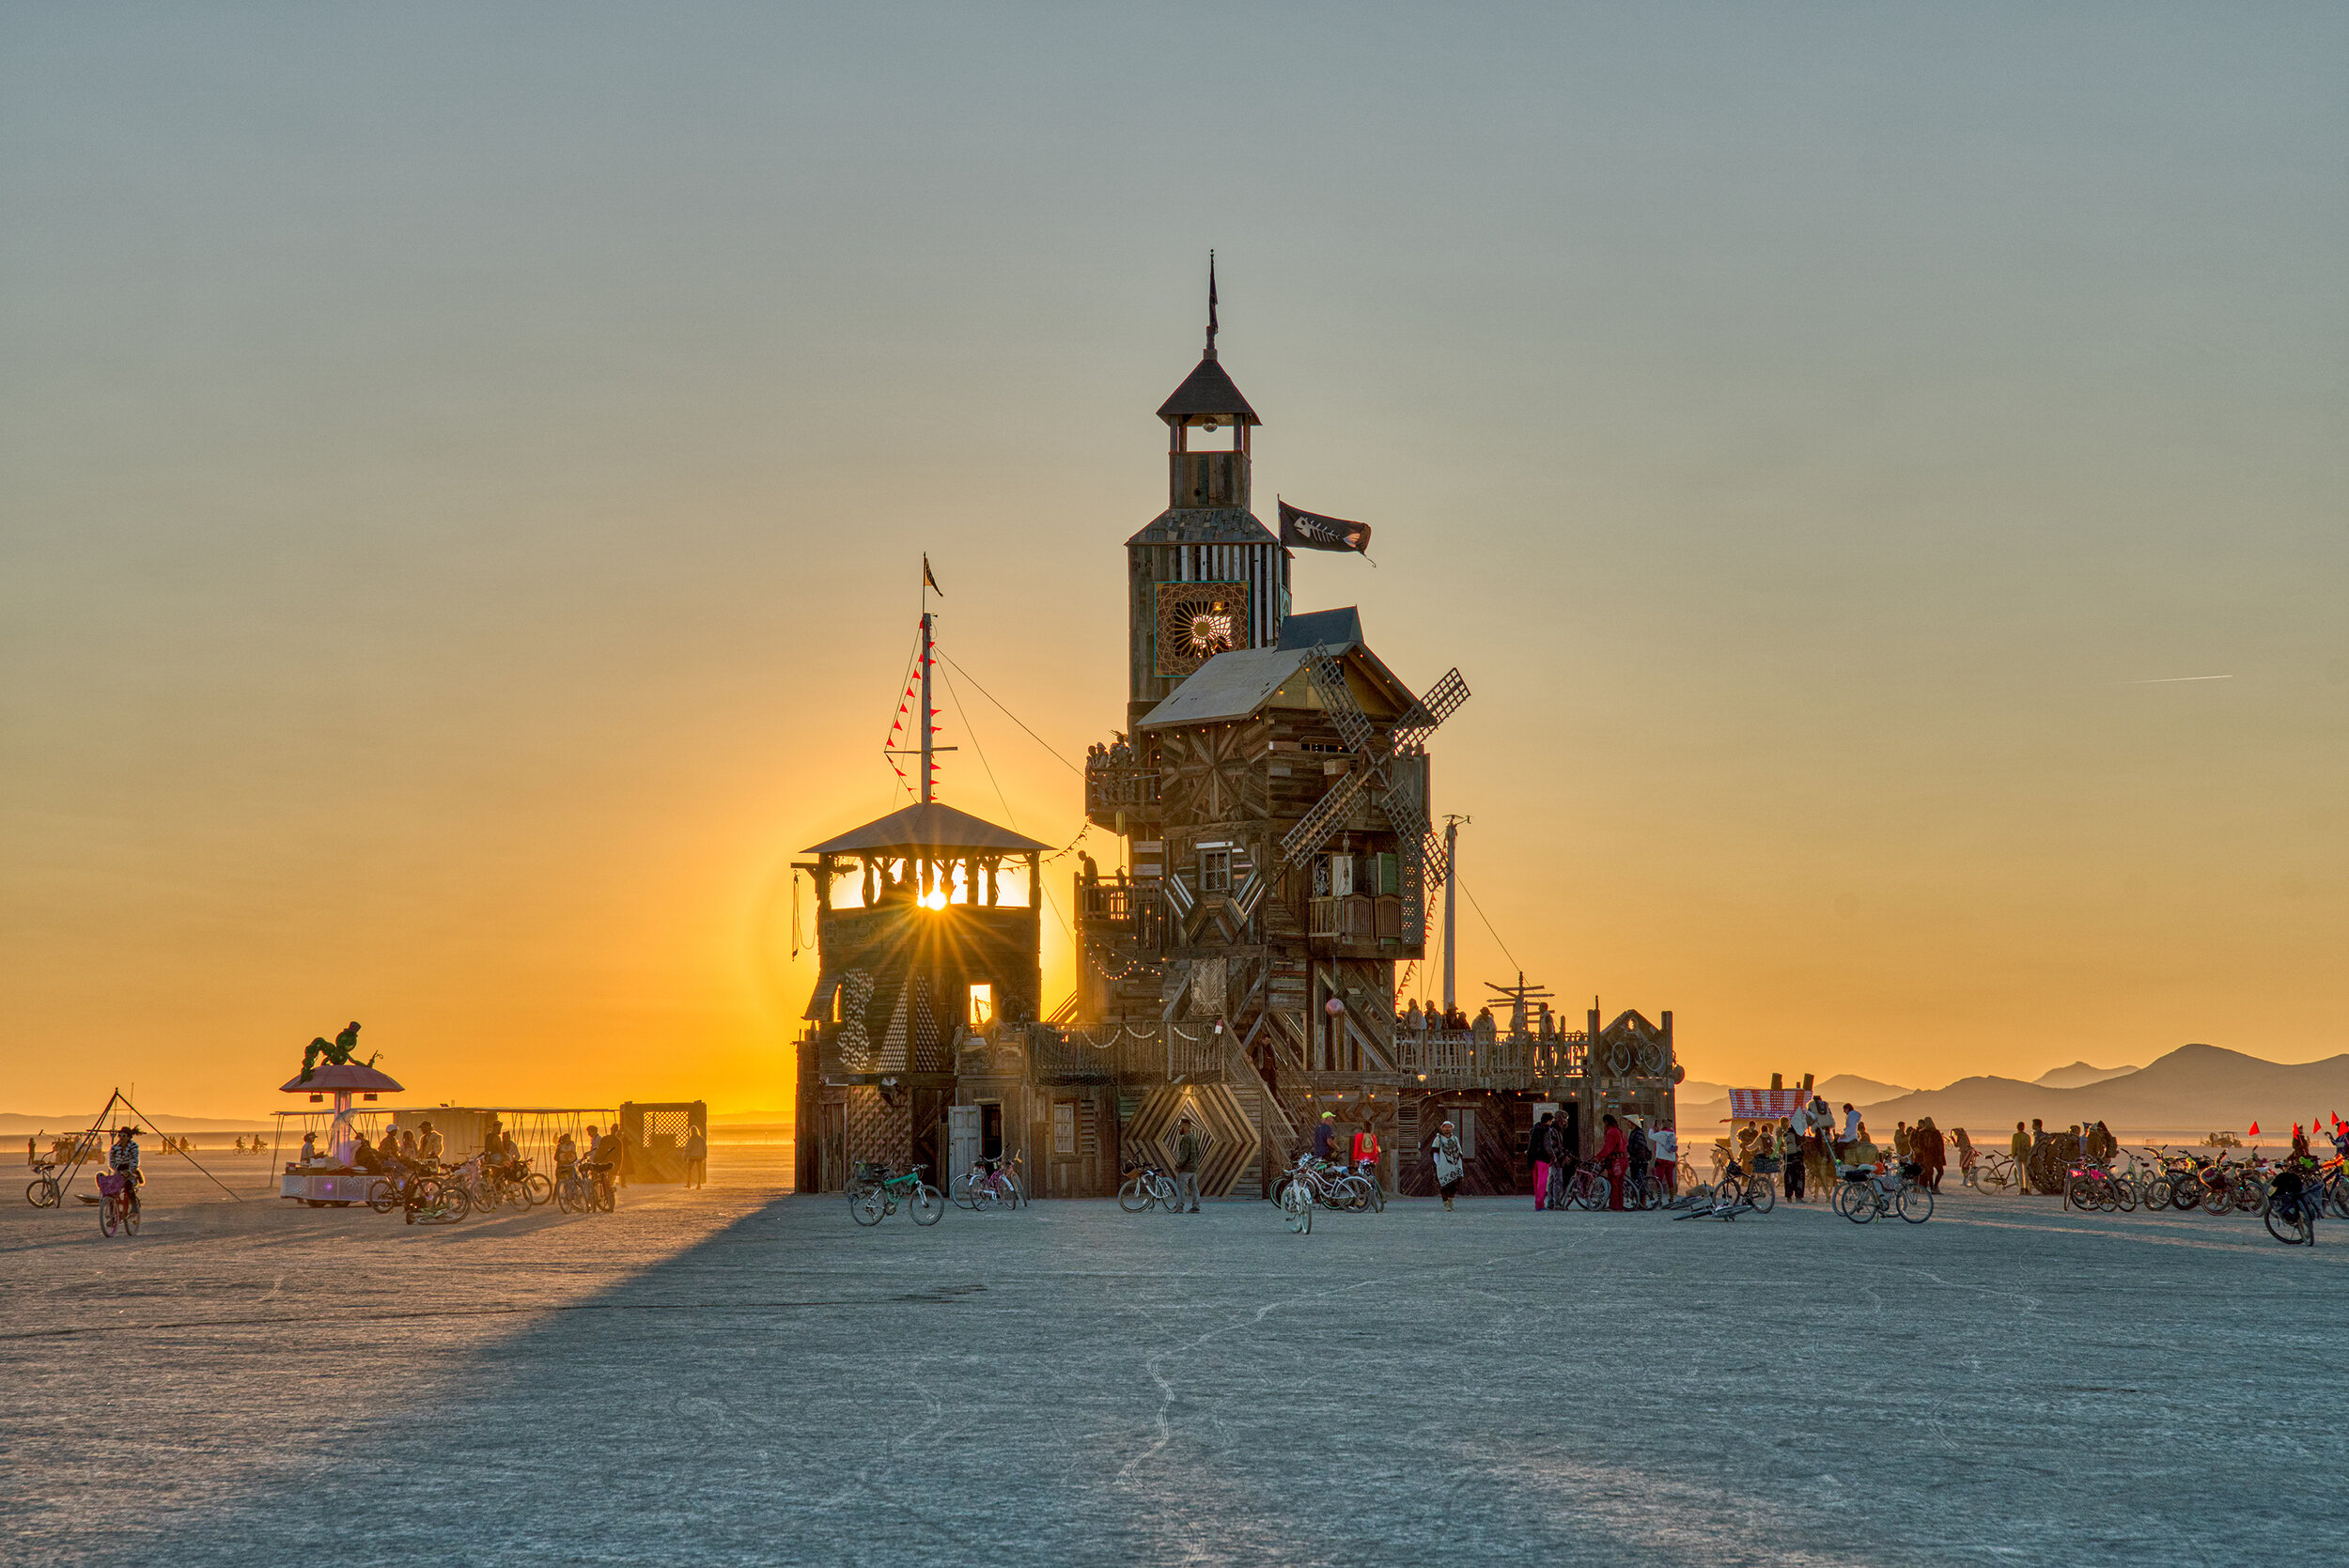 Burning Man 2019 - The Folly